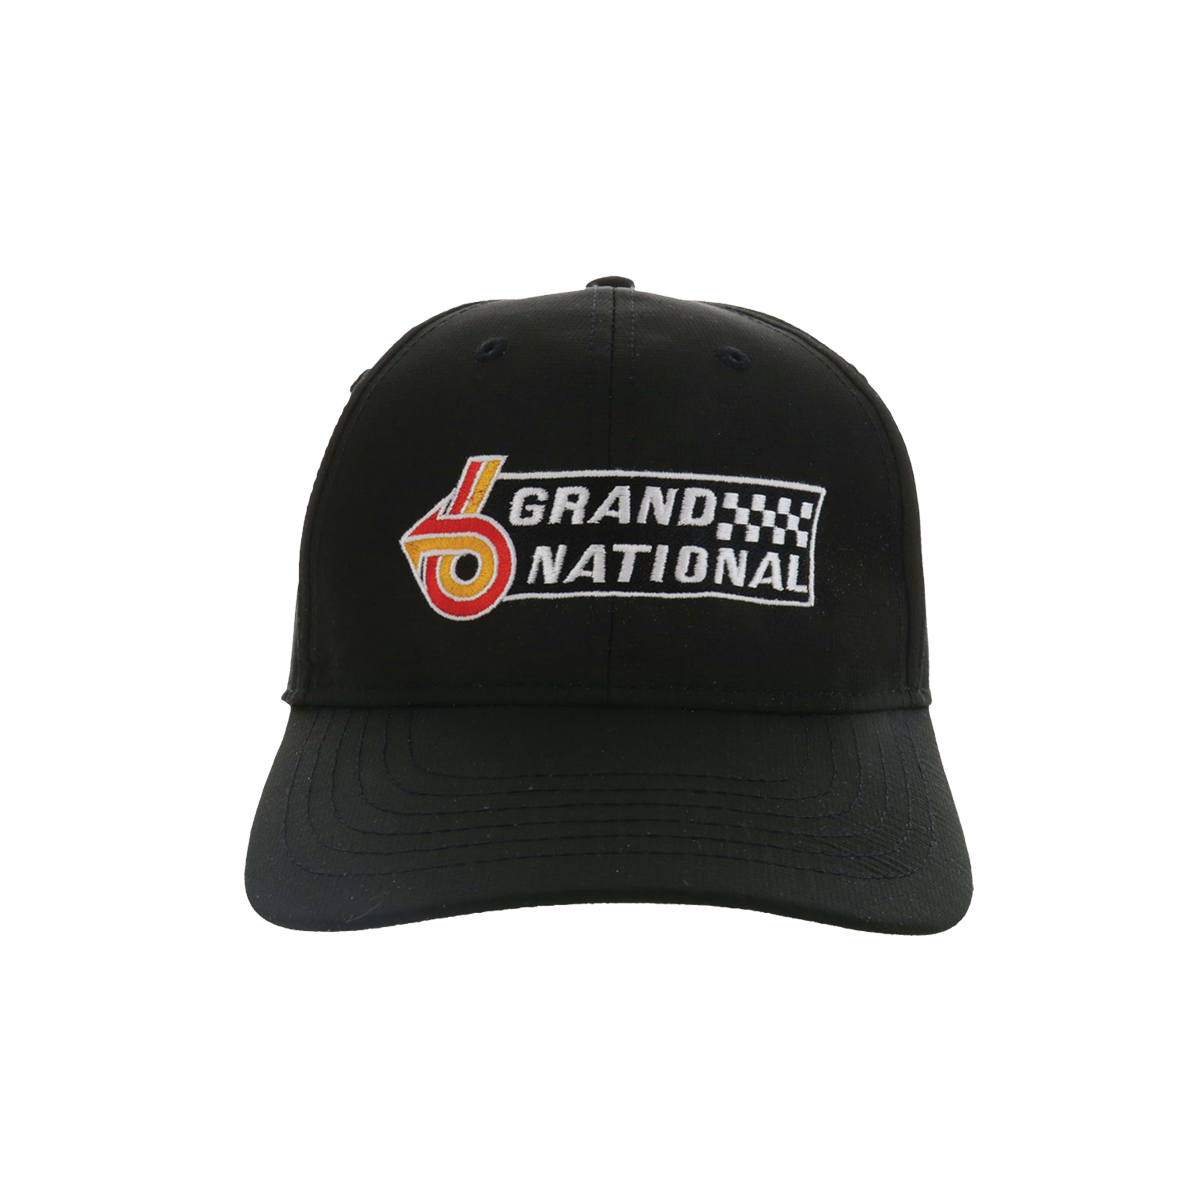 Buick Grand National Baseball Cap